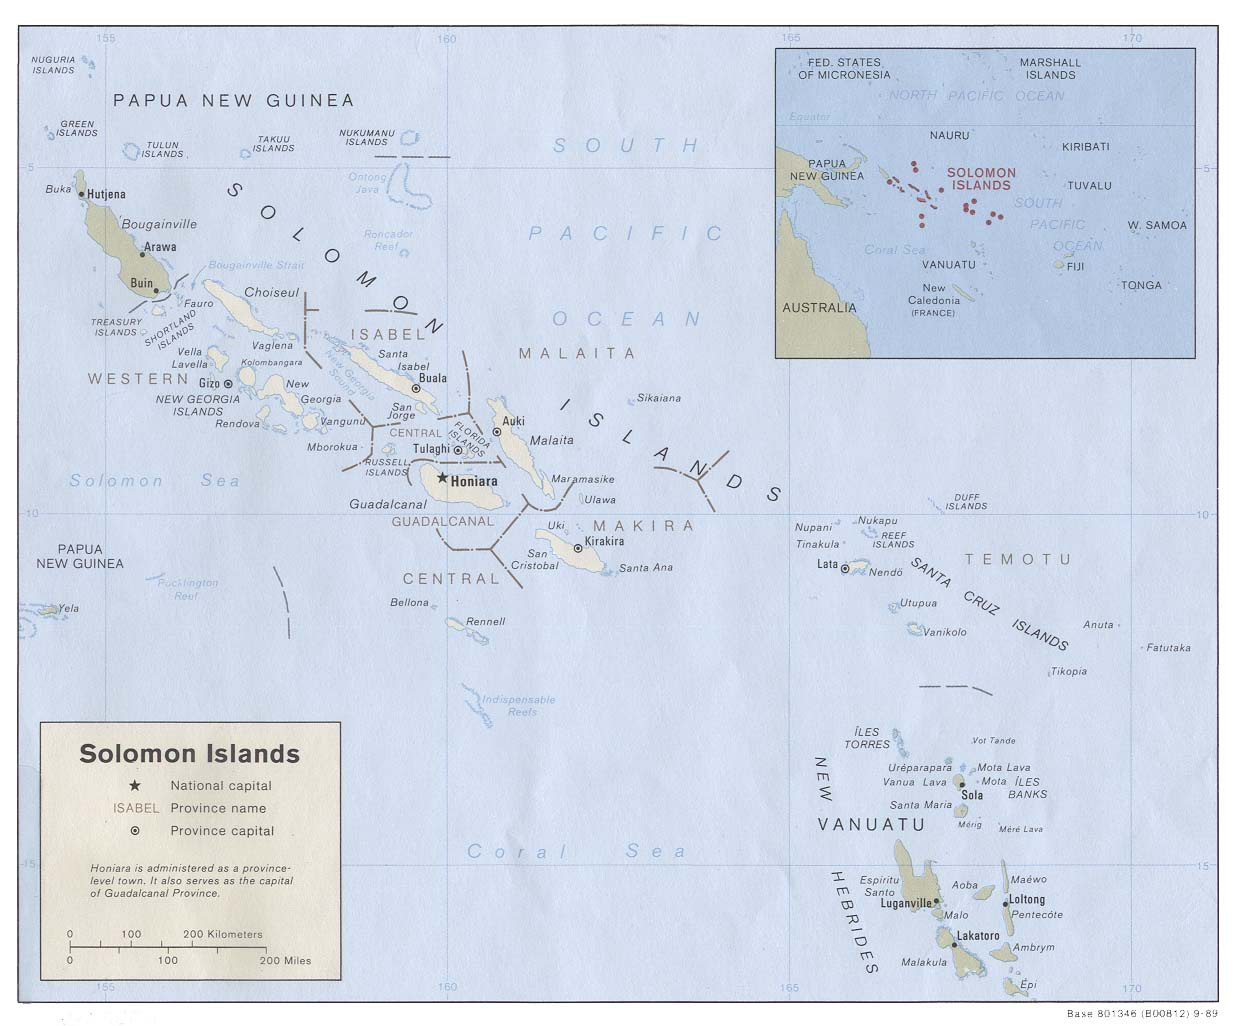 Map of the Solomon Islands (Image: U.S. Central Intelligence Agency, Public domain, via Wikimedia Commons)